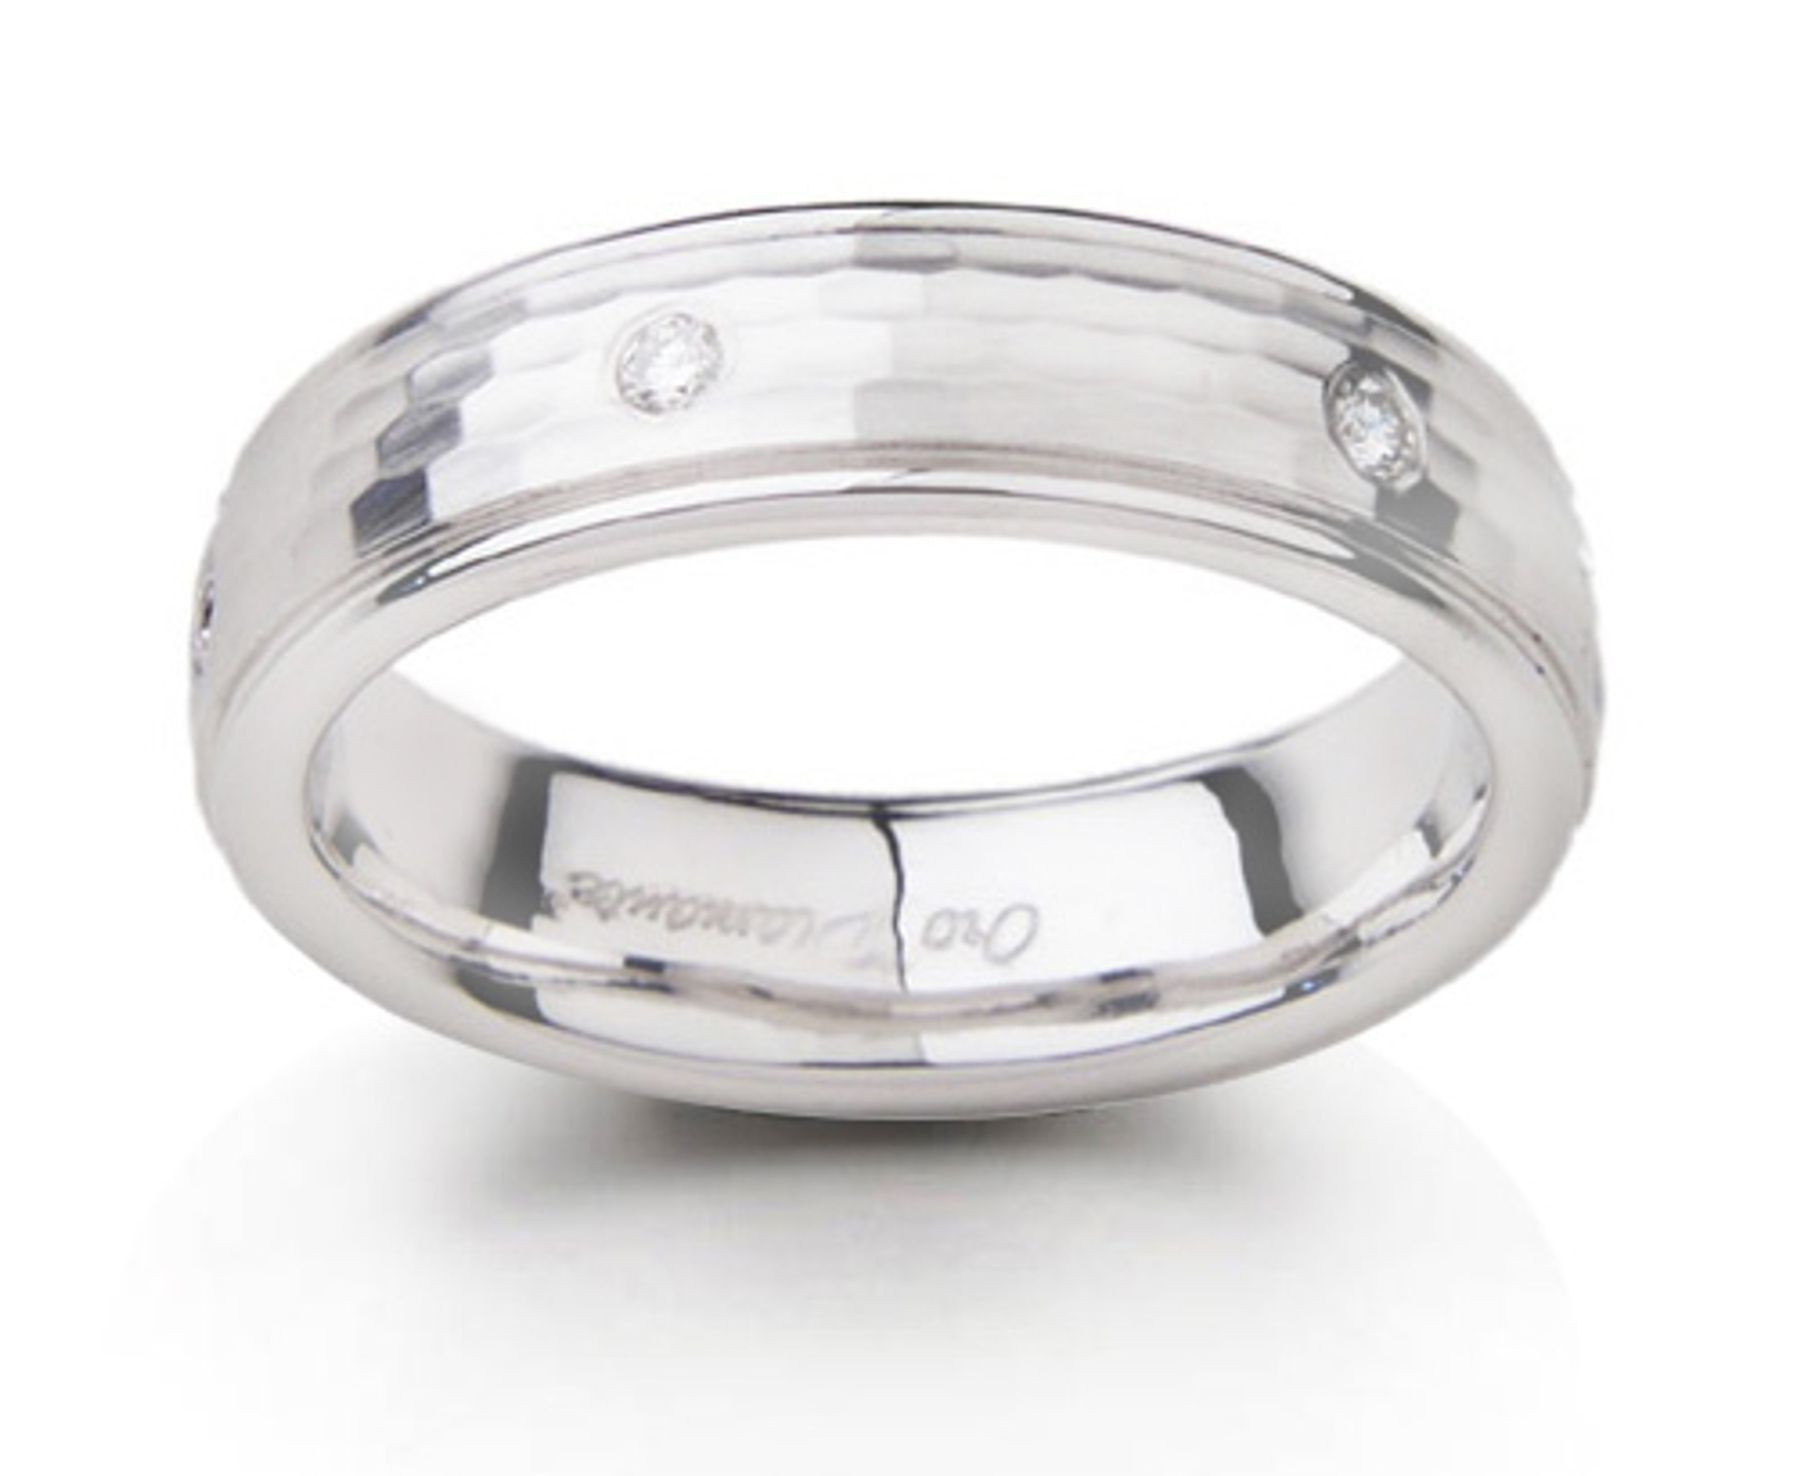 Platinum Diamond Anniversary Rings